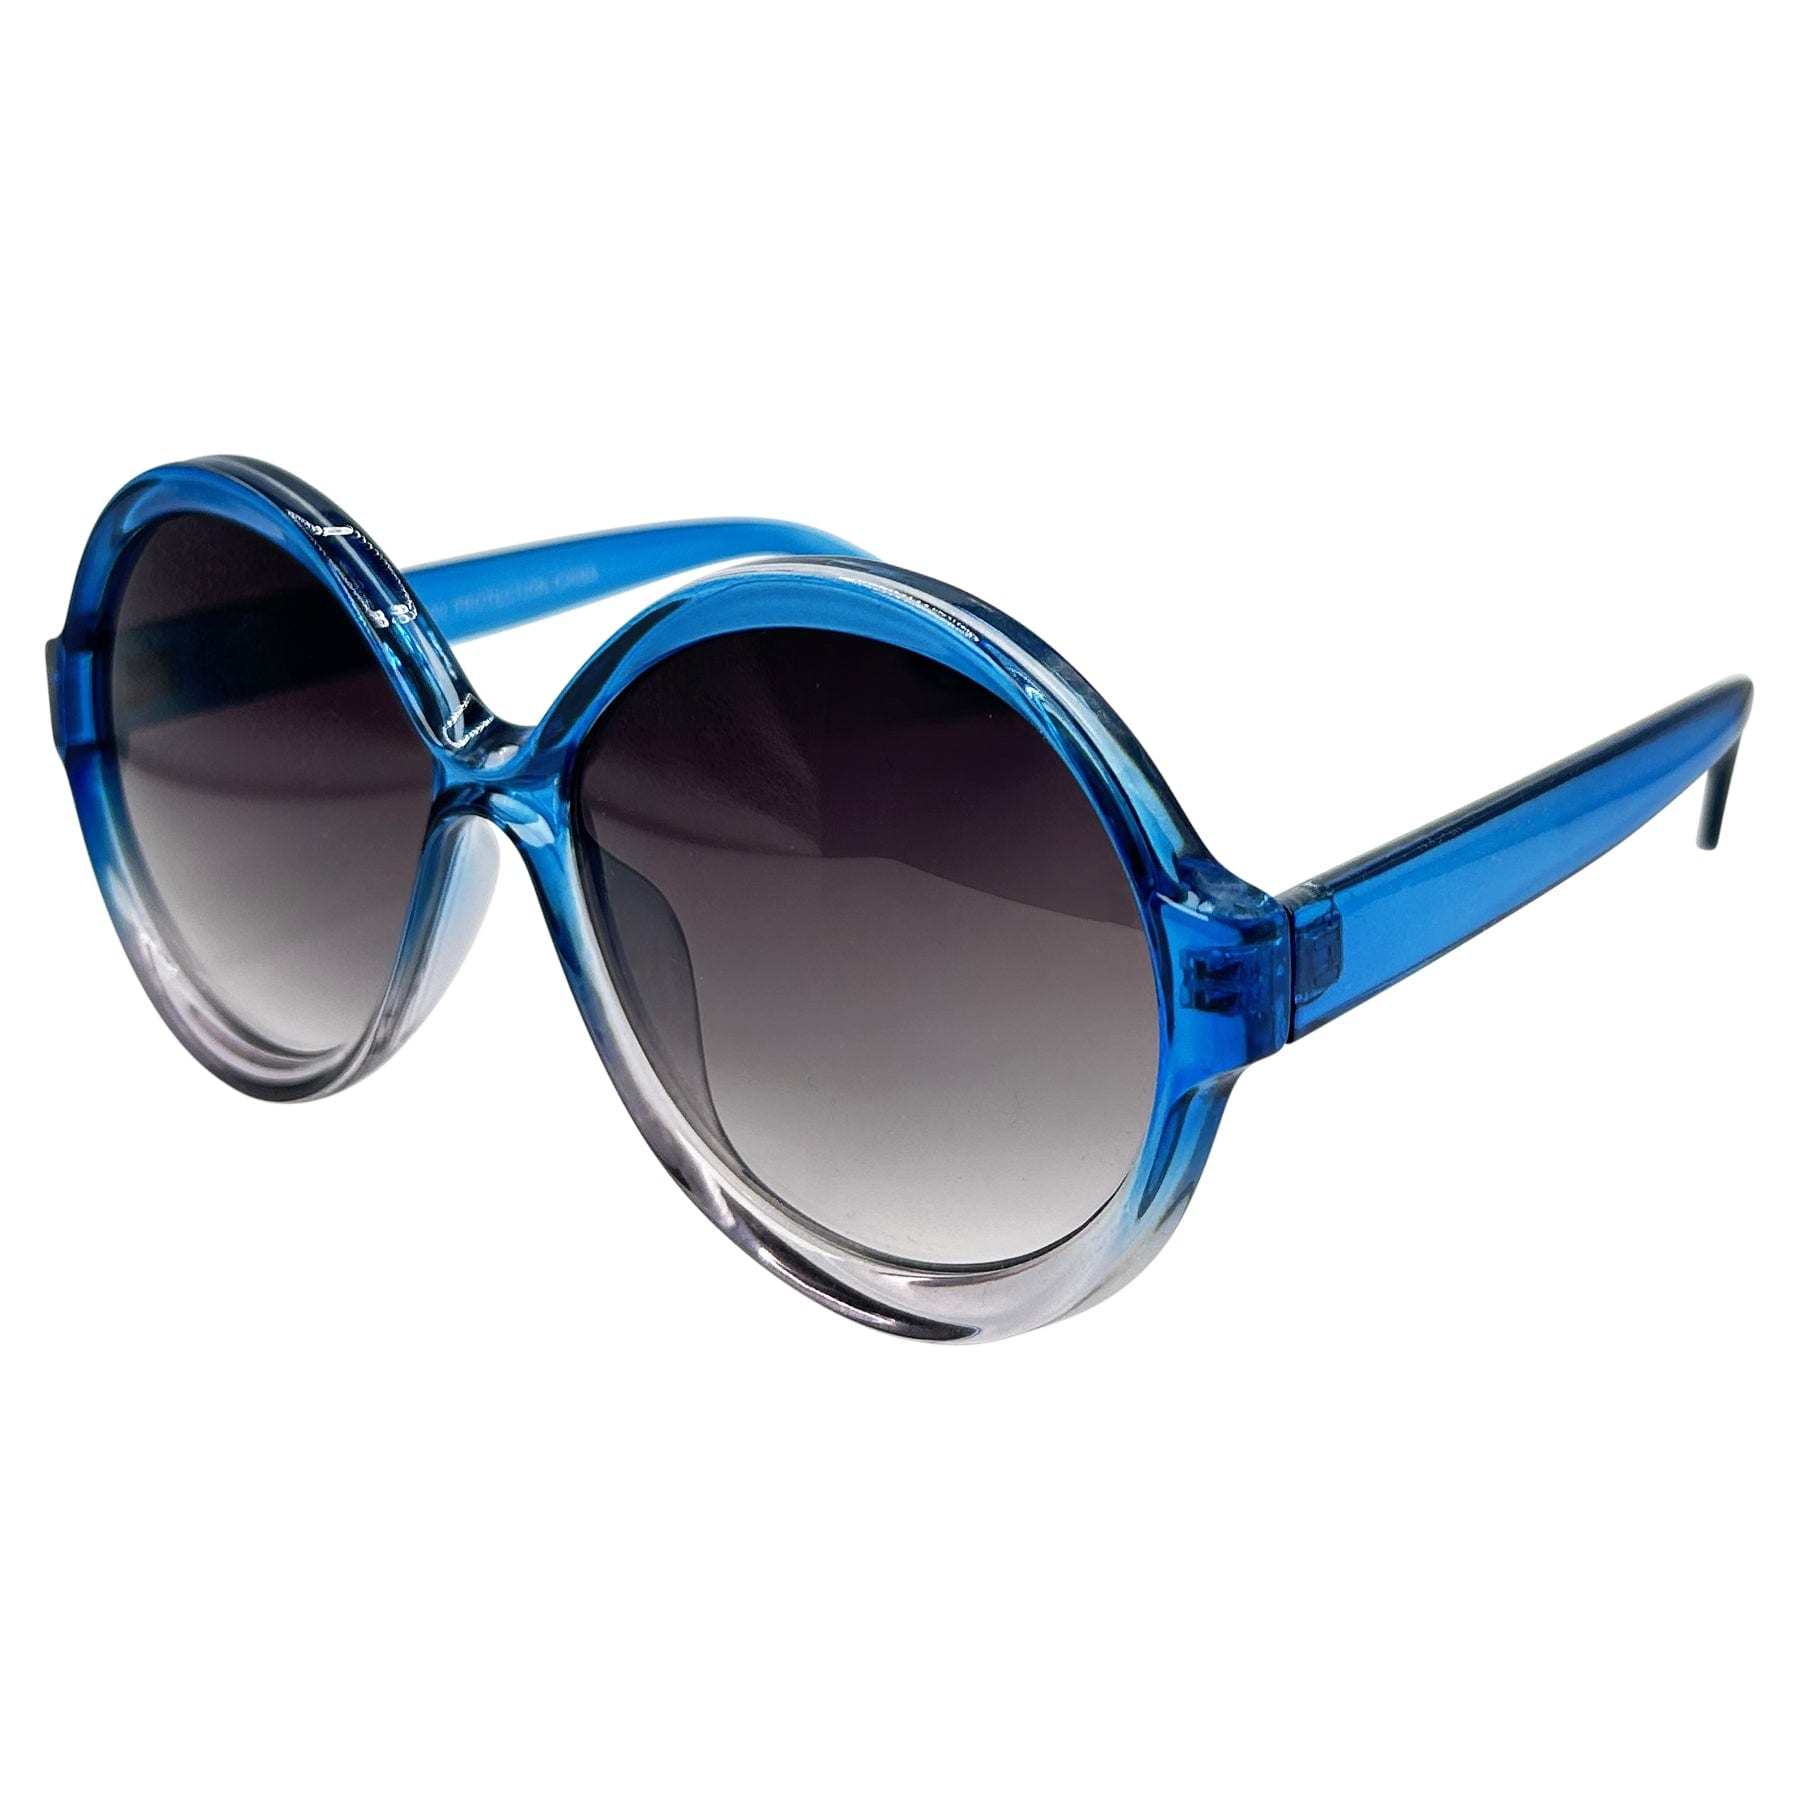 boho chic blue sunglasses with a round oversized sleaze style